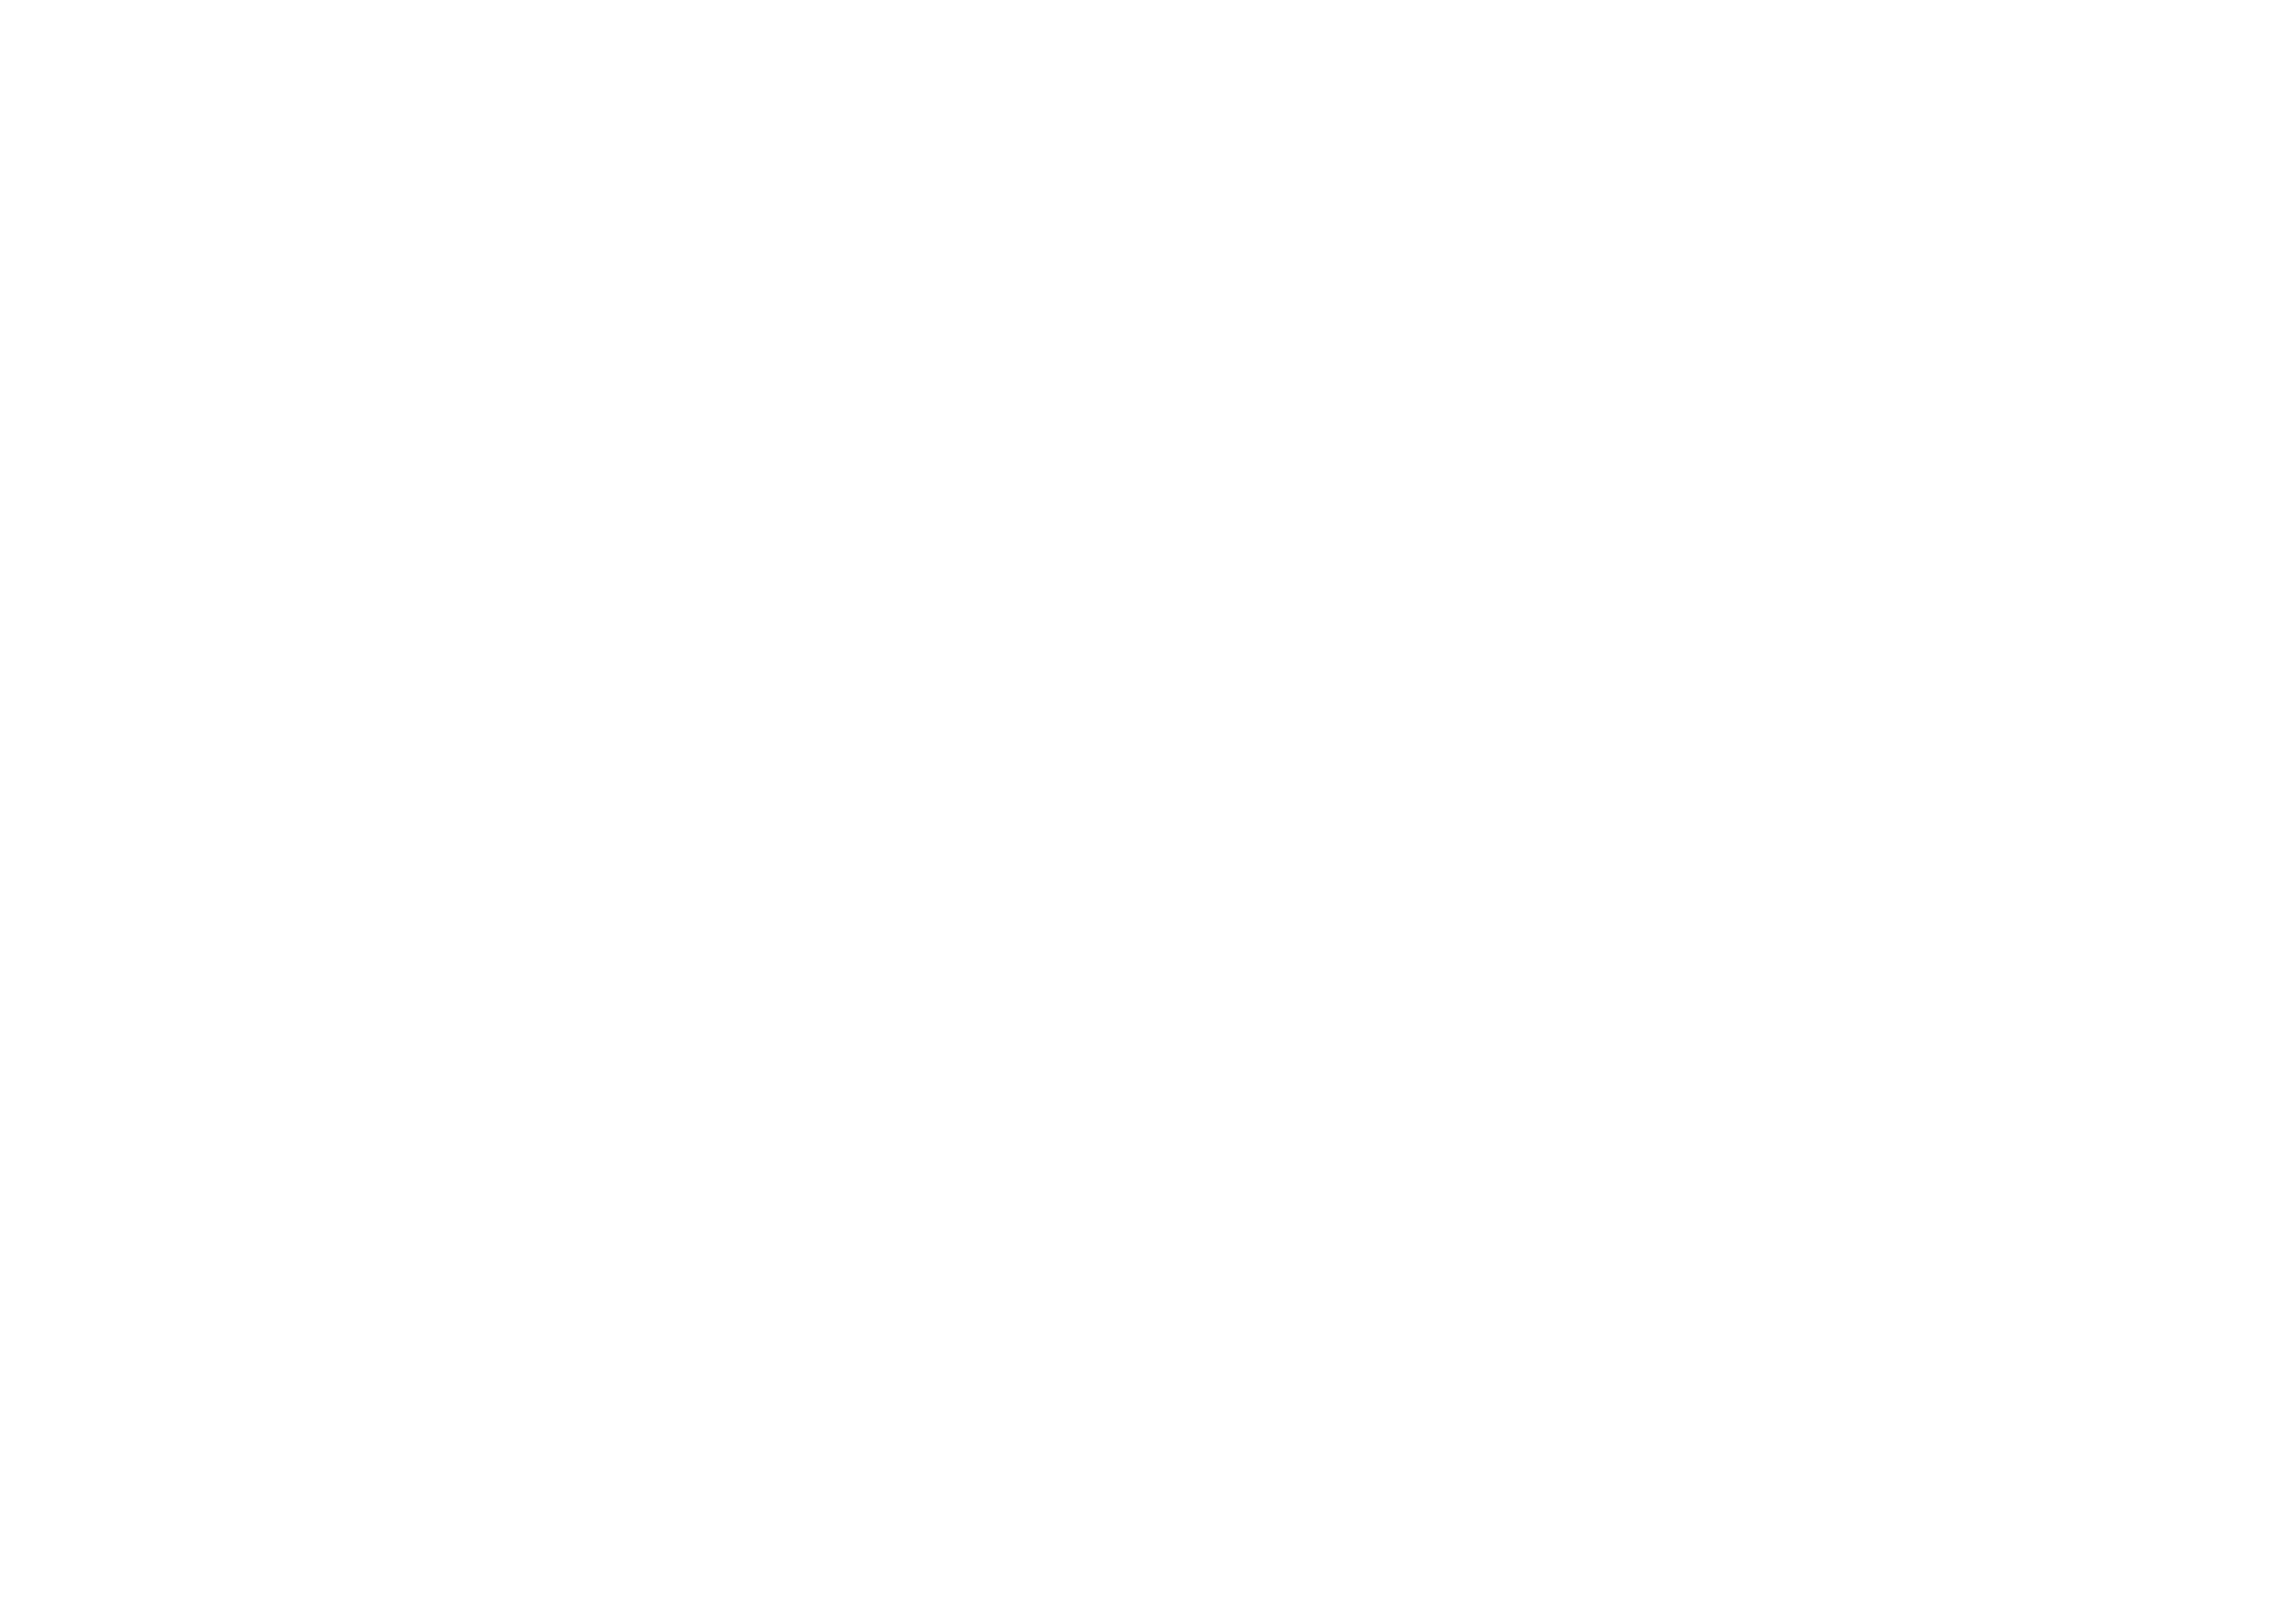 de Boislaville